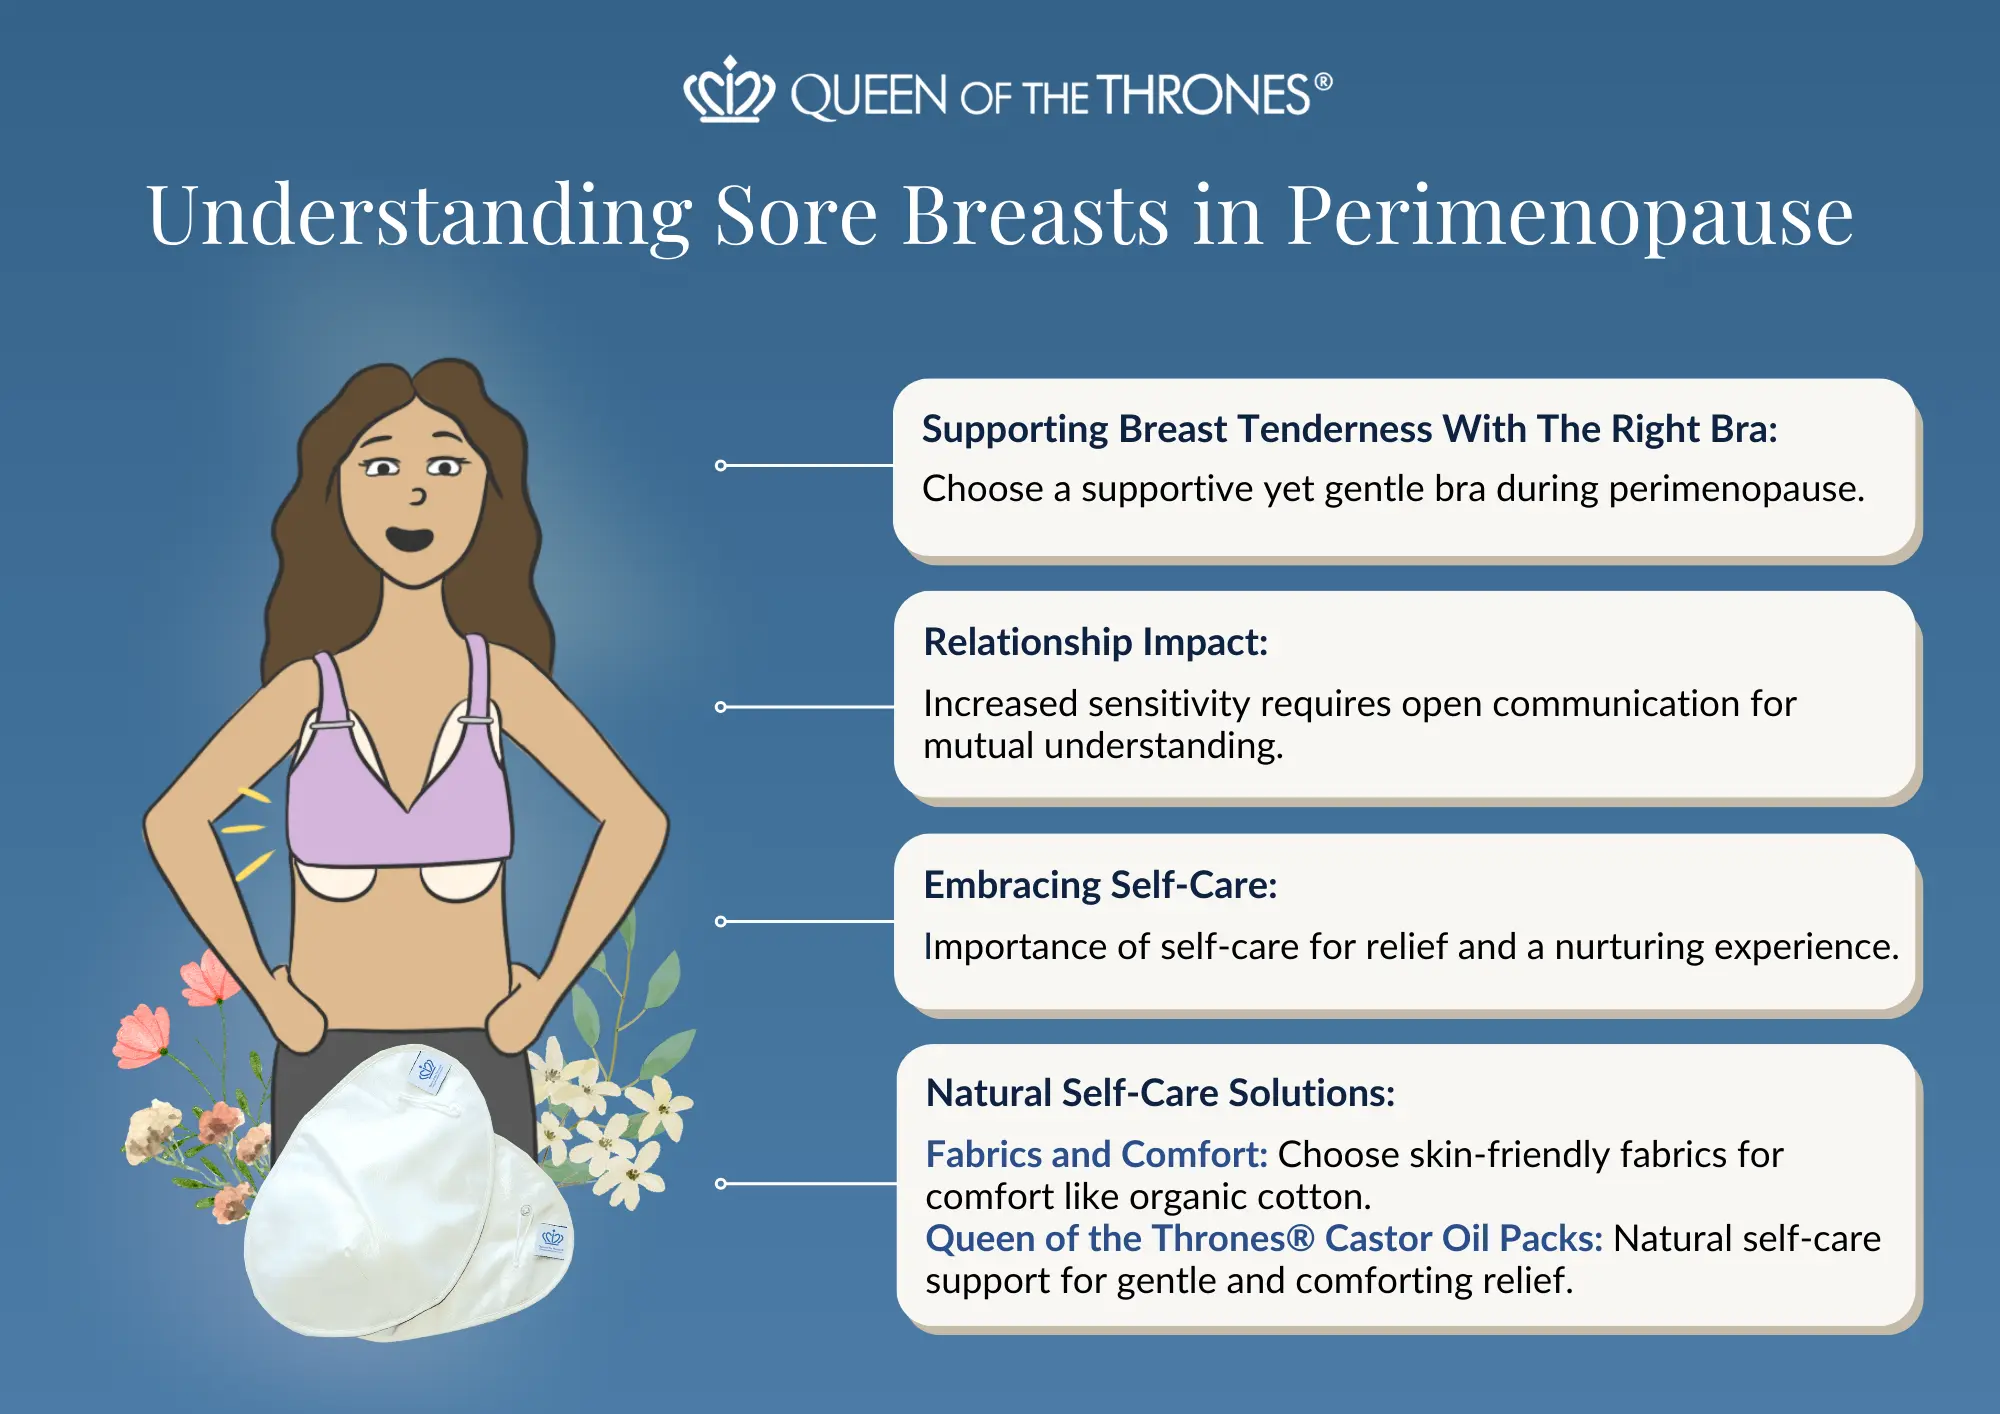 Understanding sore breasts in perimenopause by Queen of the Thrones 